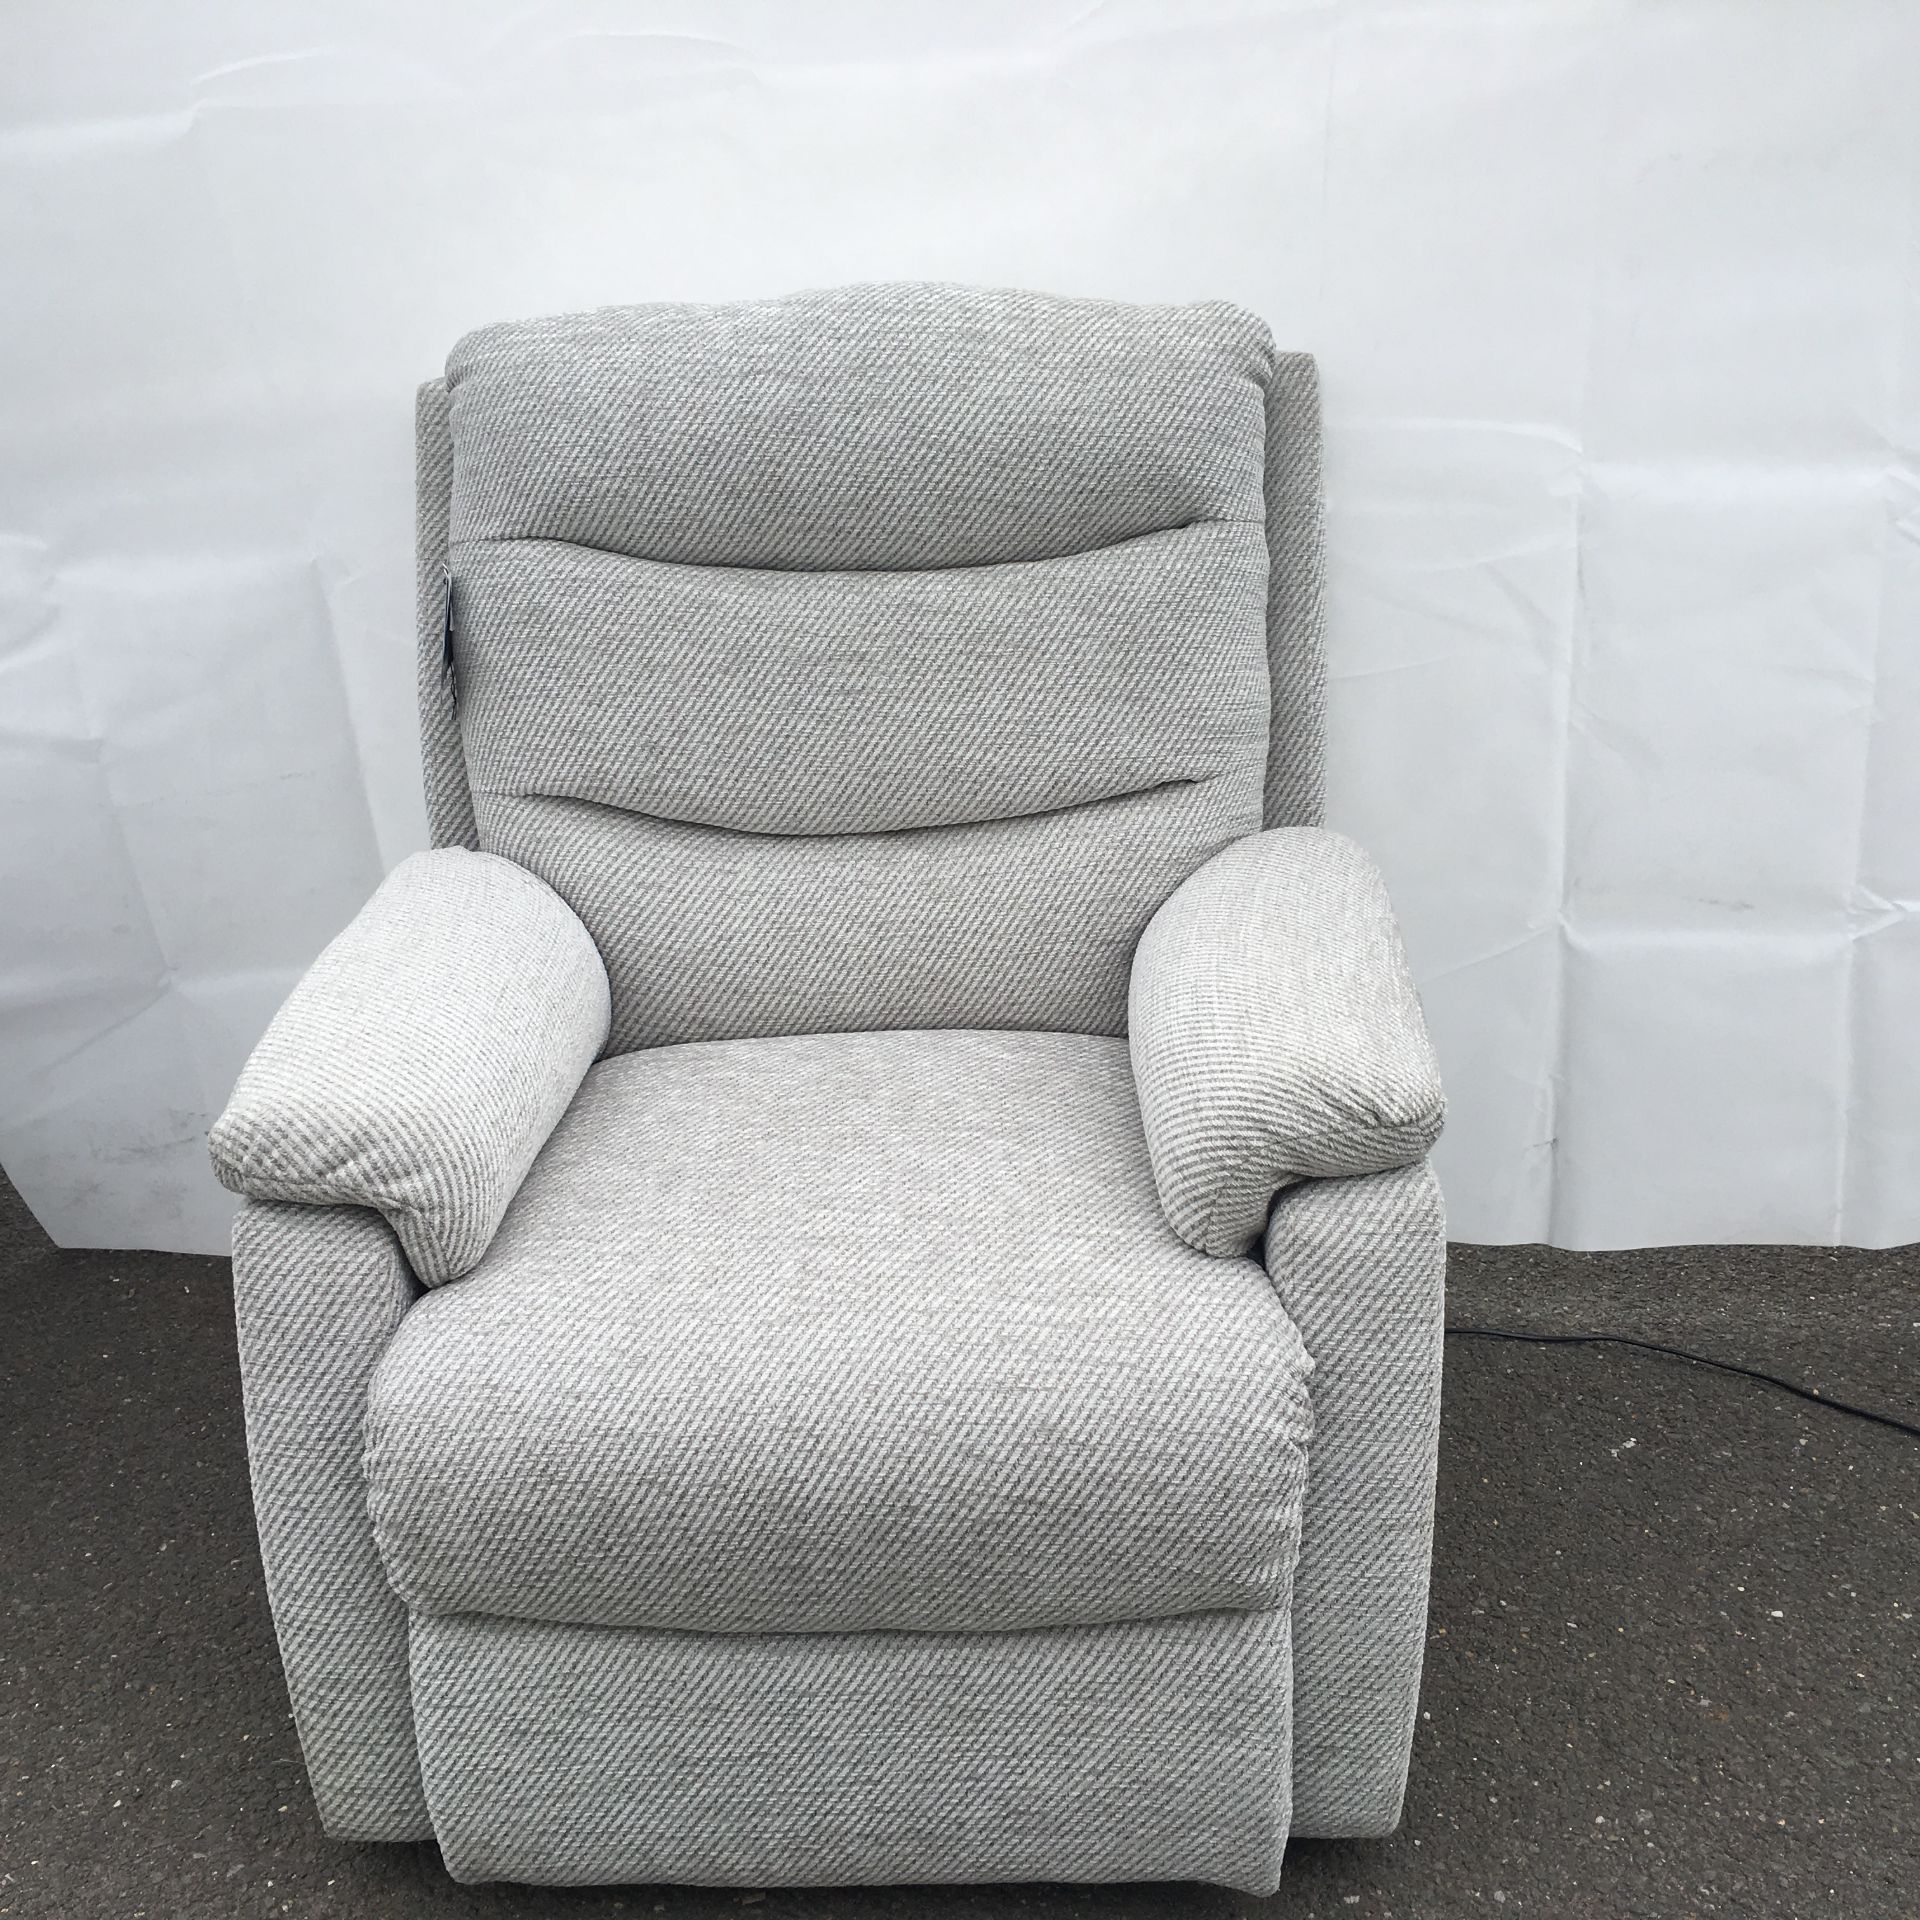 Harrow Reclining Chair - Image 3 of 3